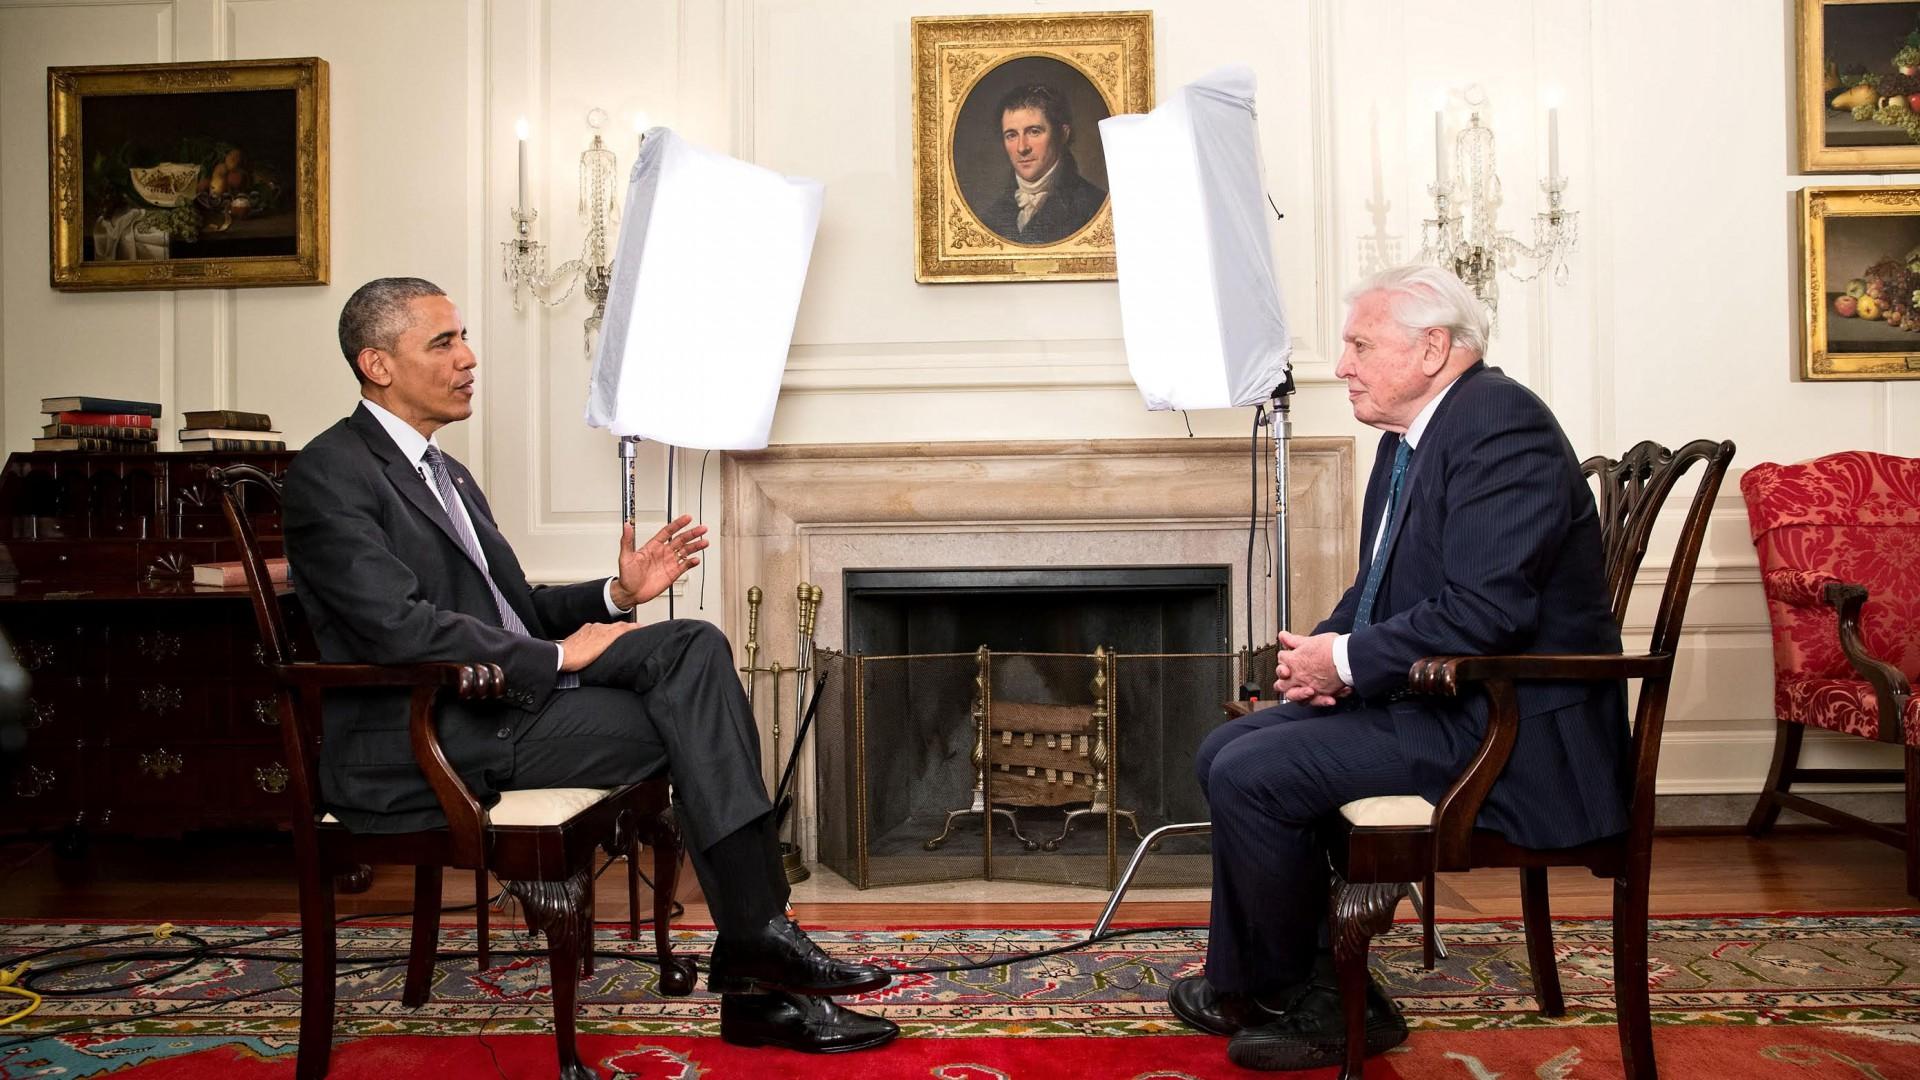 David Attenborough Meets President Obama